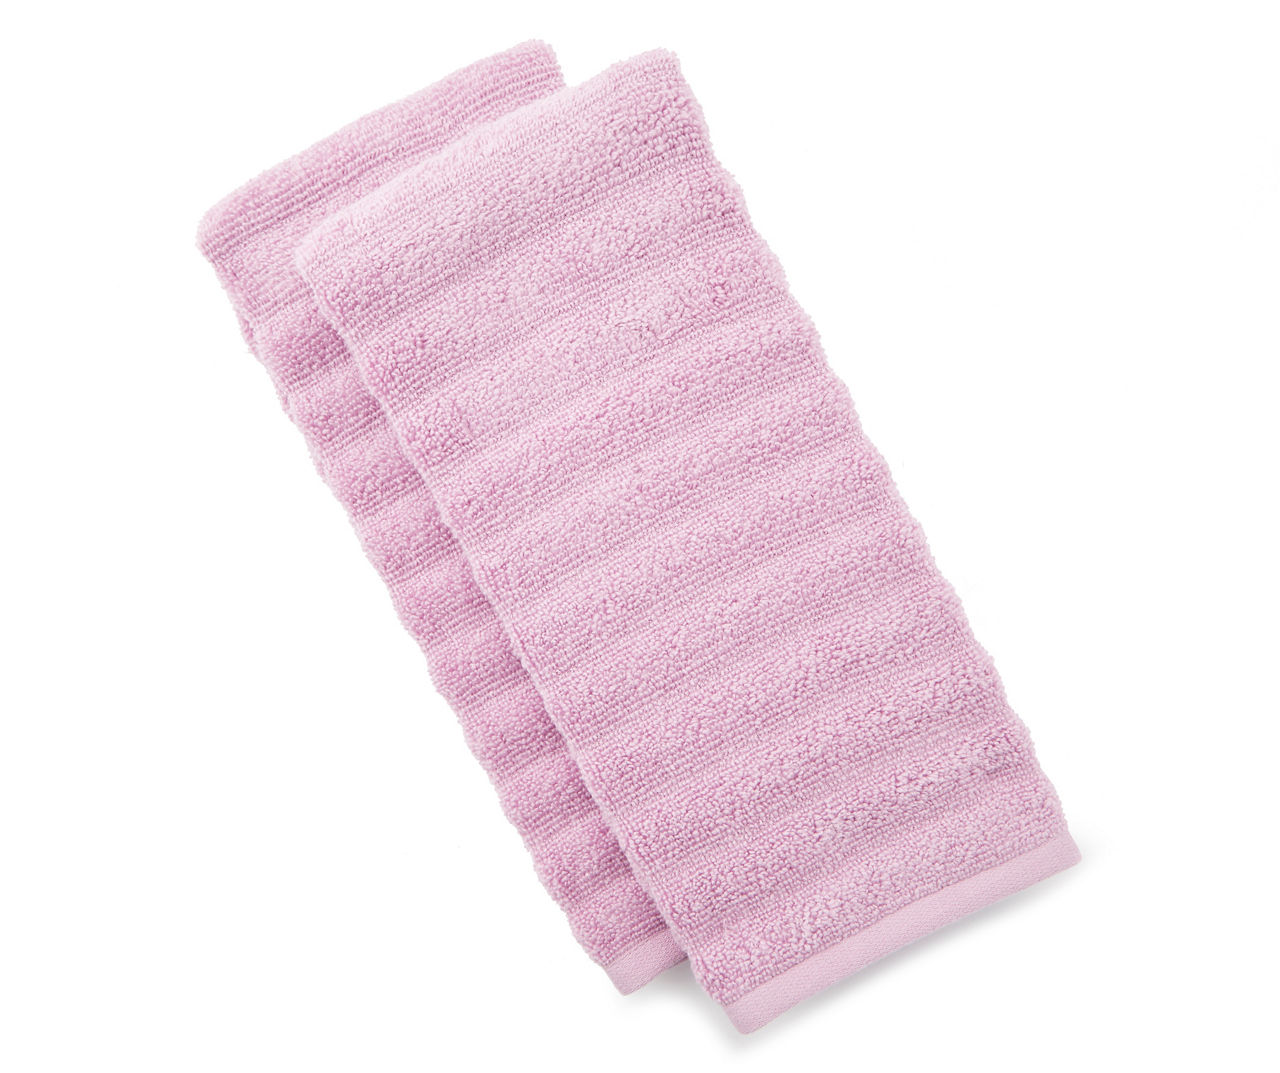 Lavender Hand Towels, 2-Pack